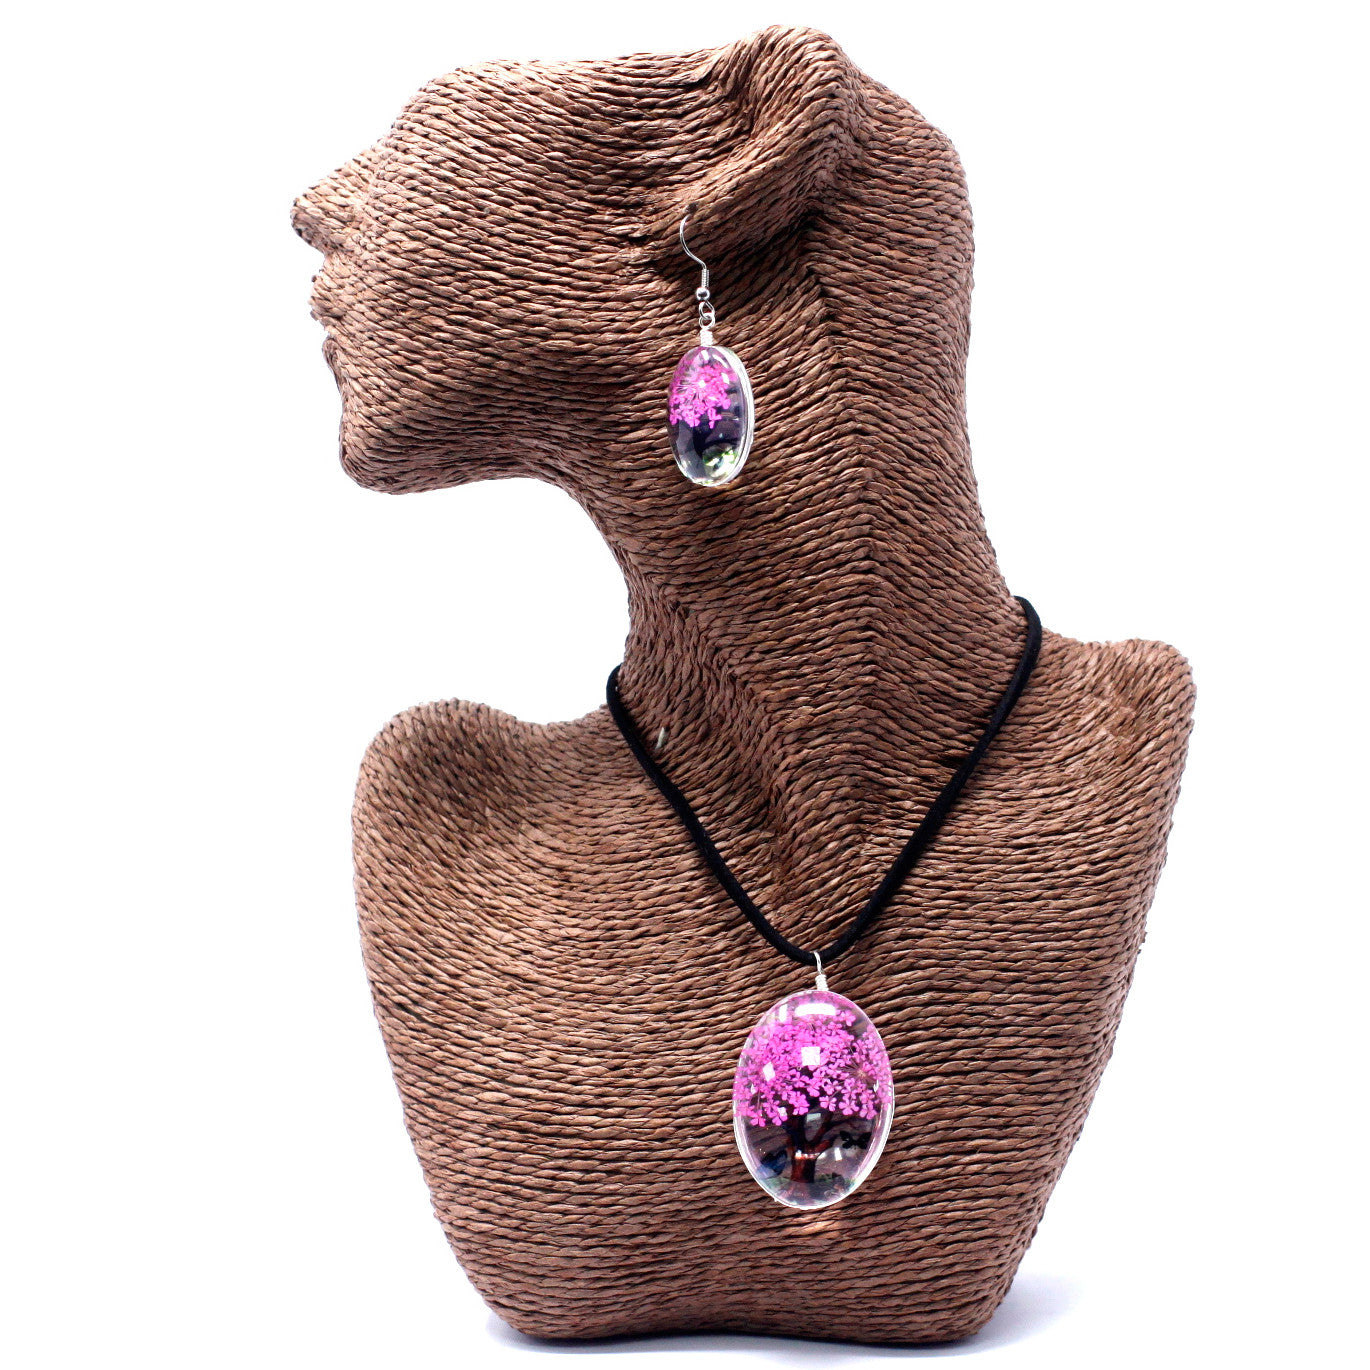 Pressed Flowers Jewelry - Tree of Life Set - Bright Pink